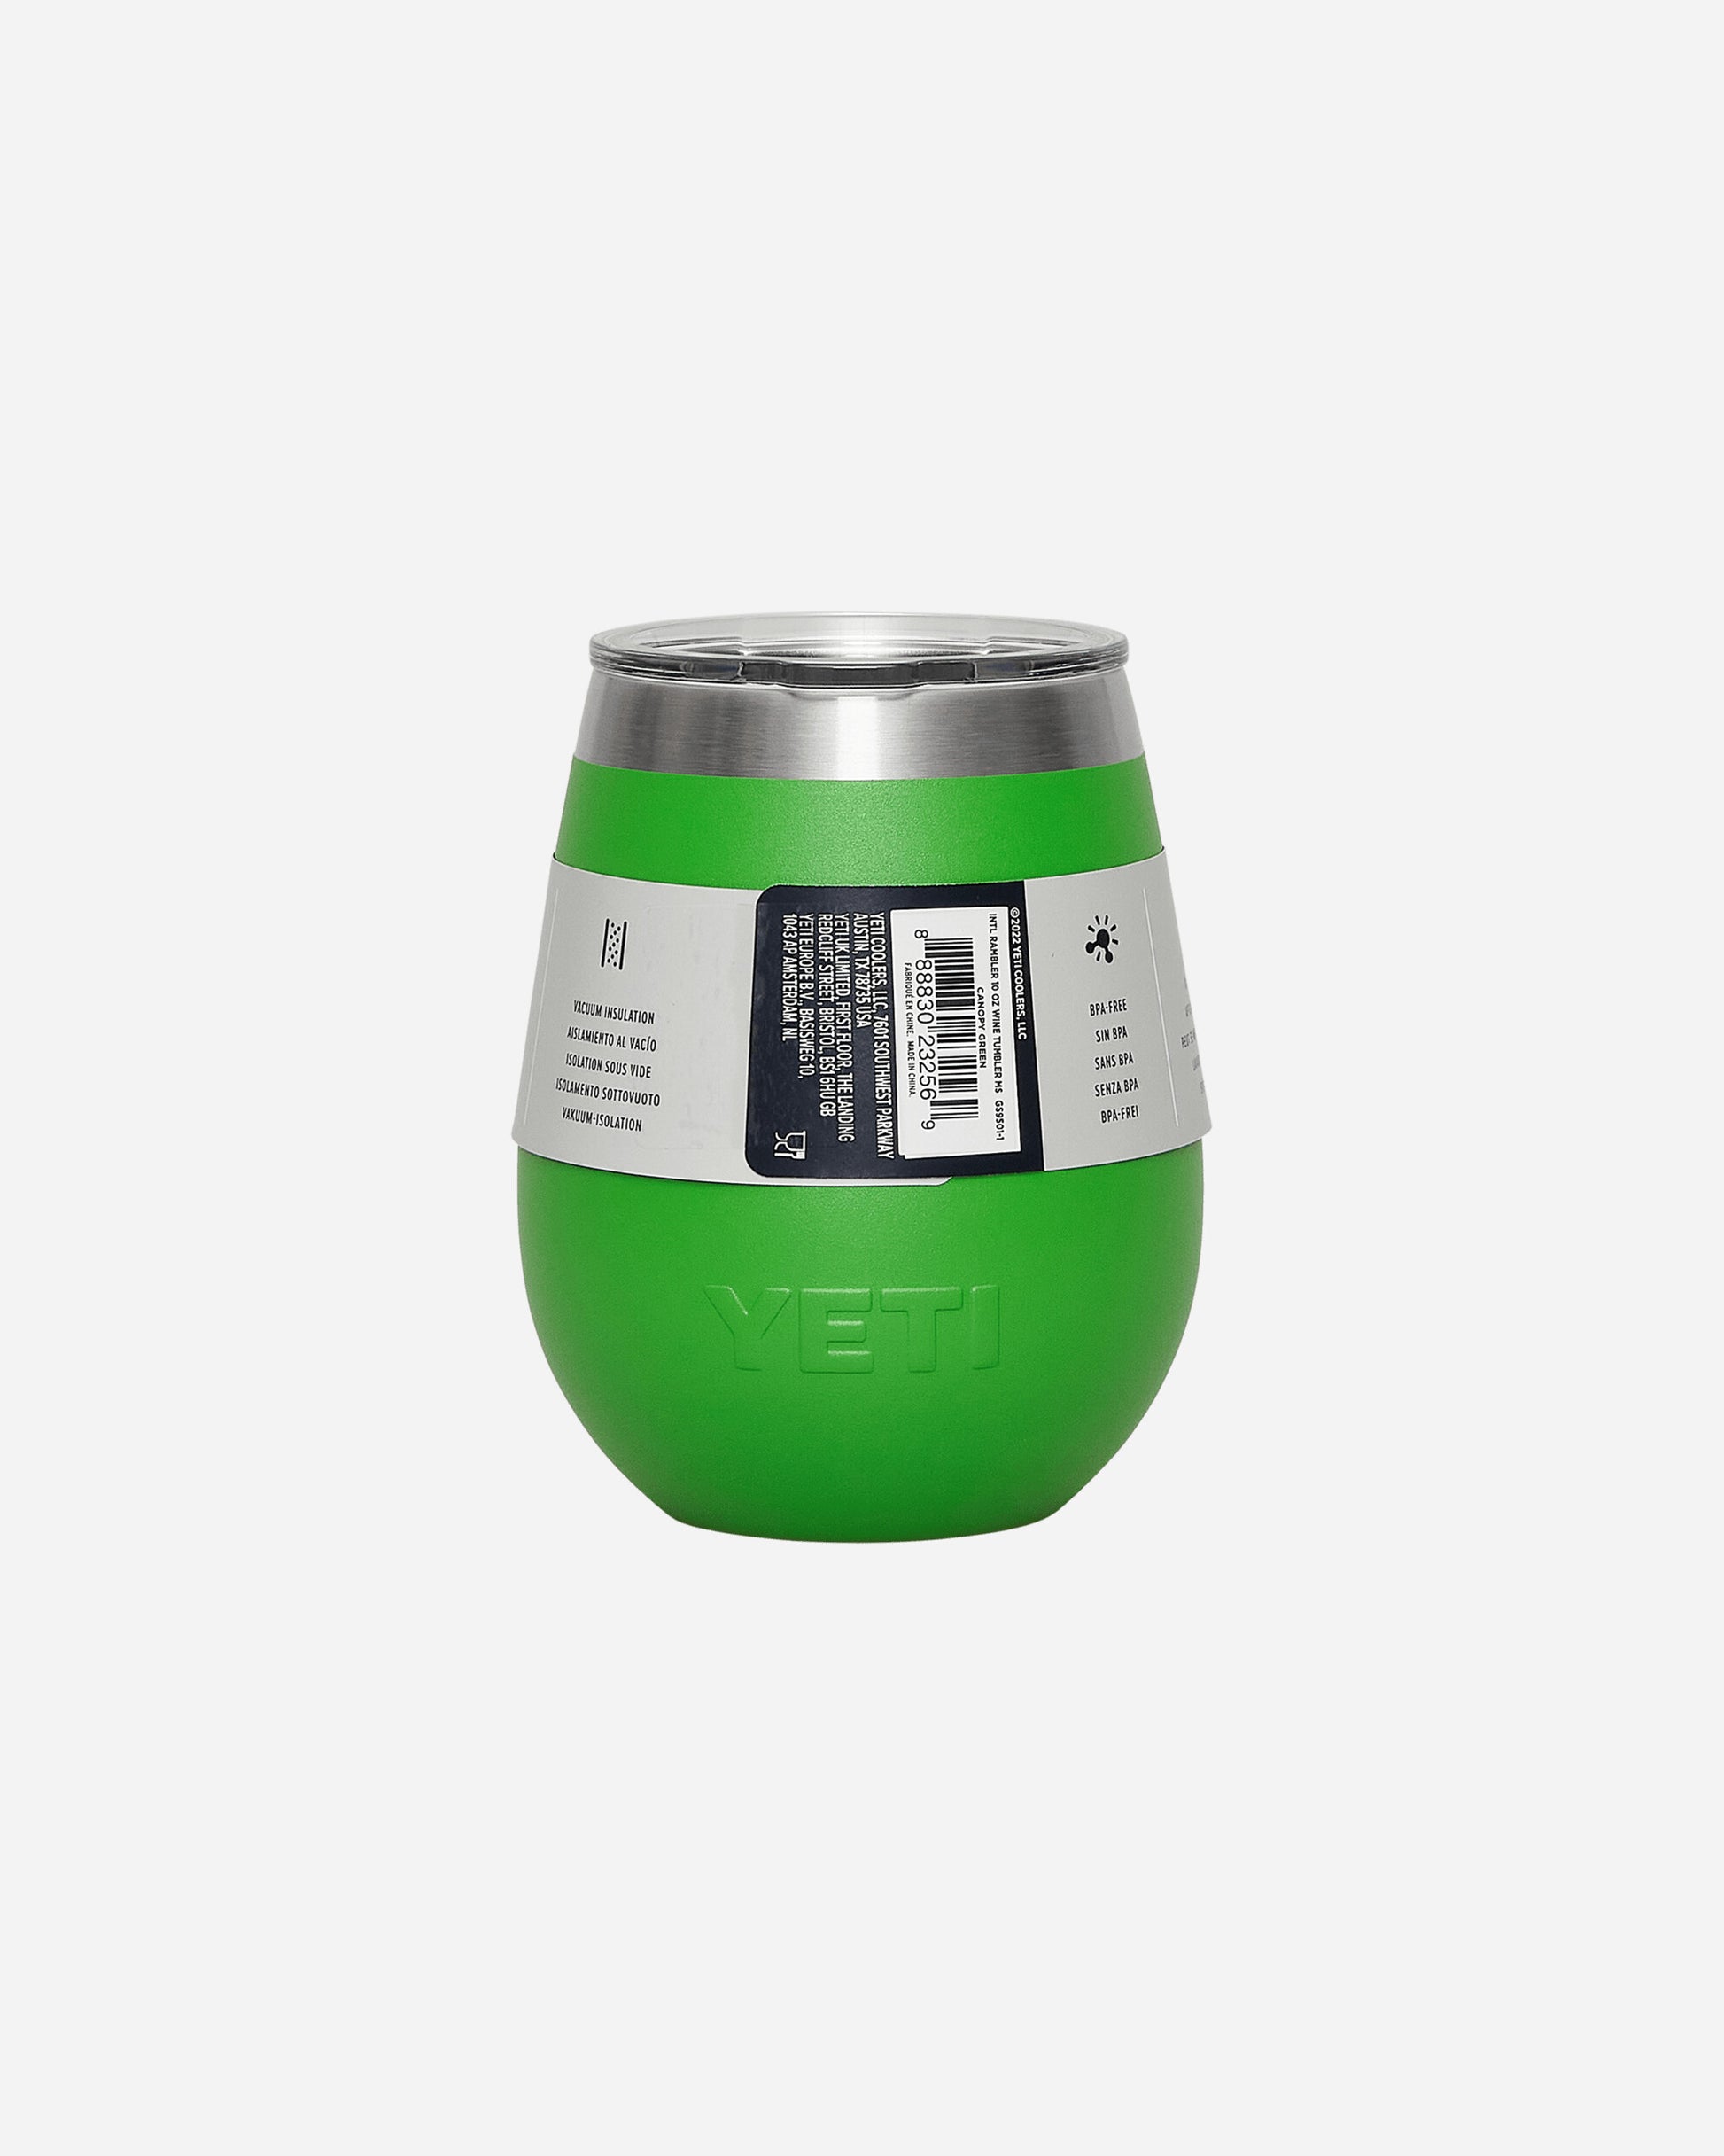 Yeti Rambler 10 Oz Wine Tumbler Canopy Green Equipment Bottles and Bowls 0303 SPG